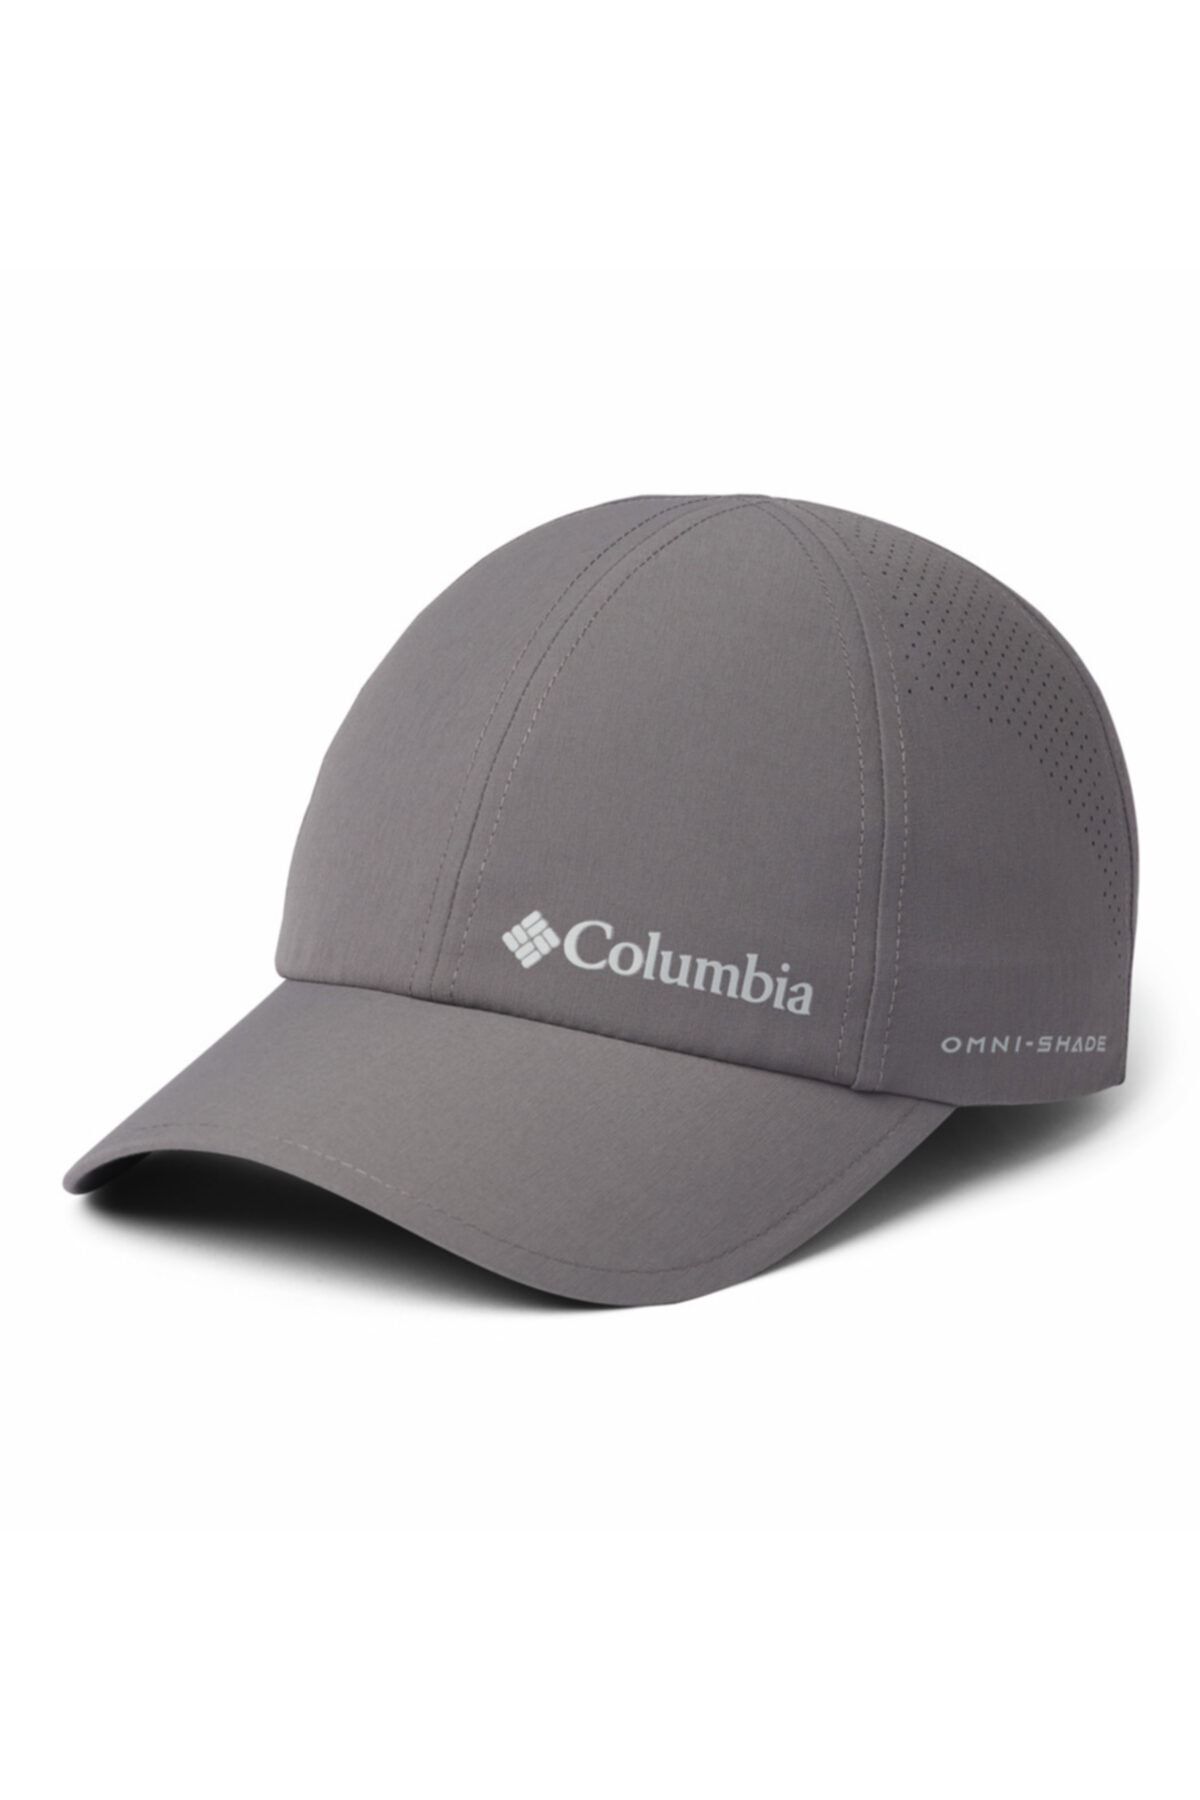 Columbia کلاه توپ نقره ای Ridge III یونیکس